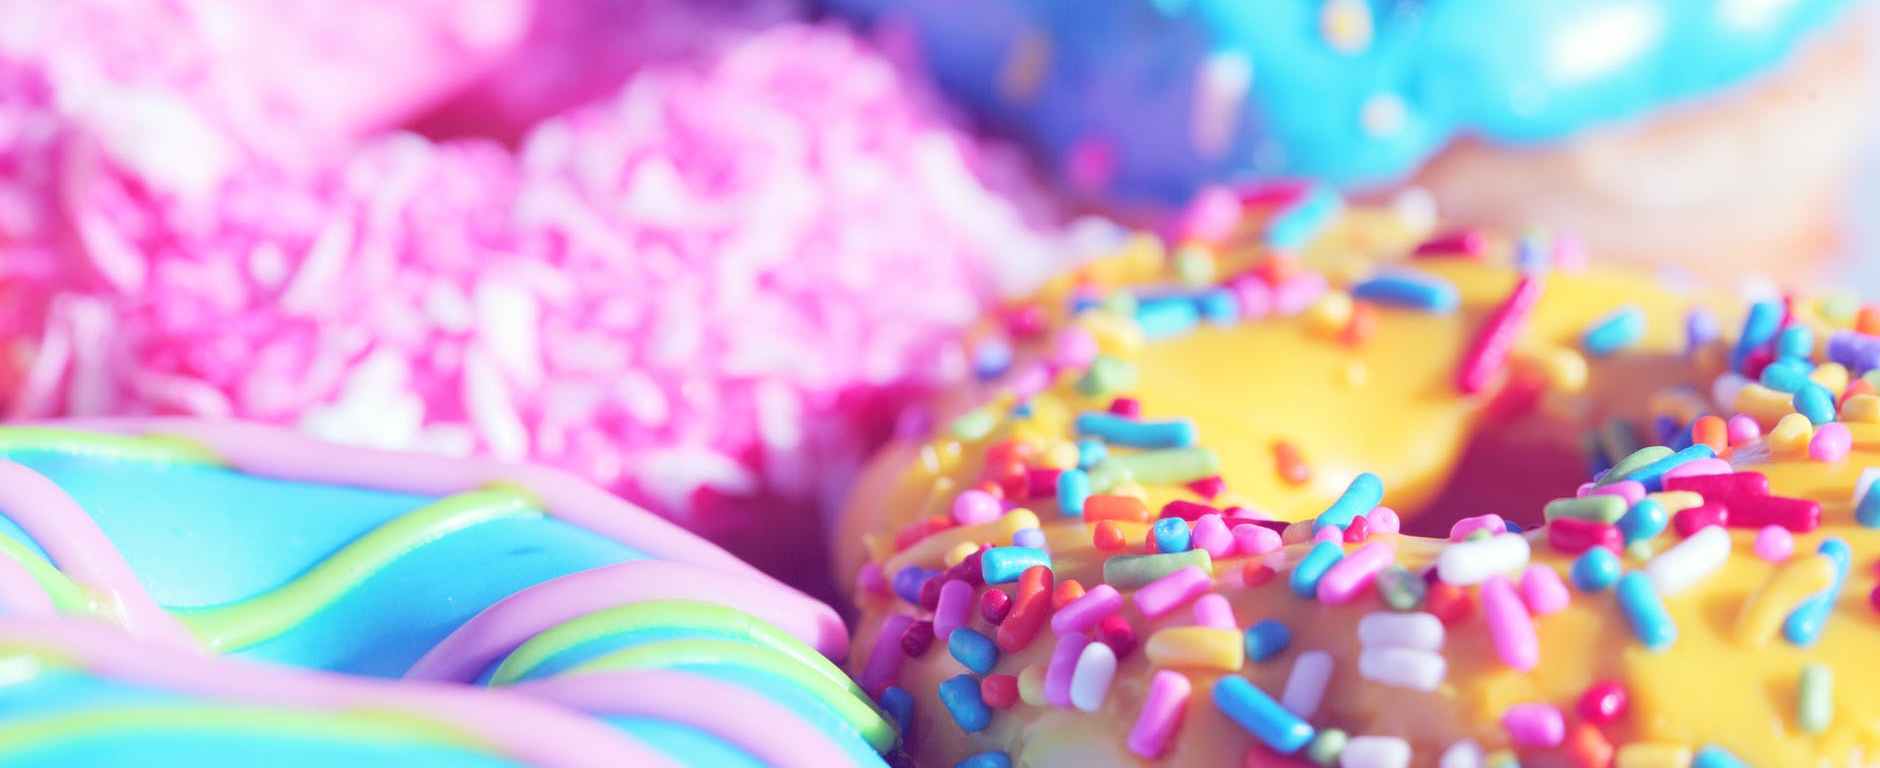 Gambar closeup photo of doughnuts